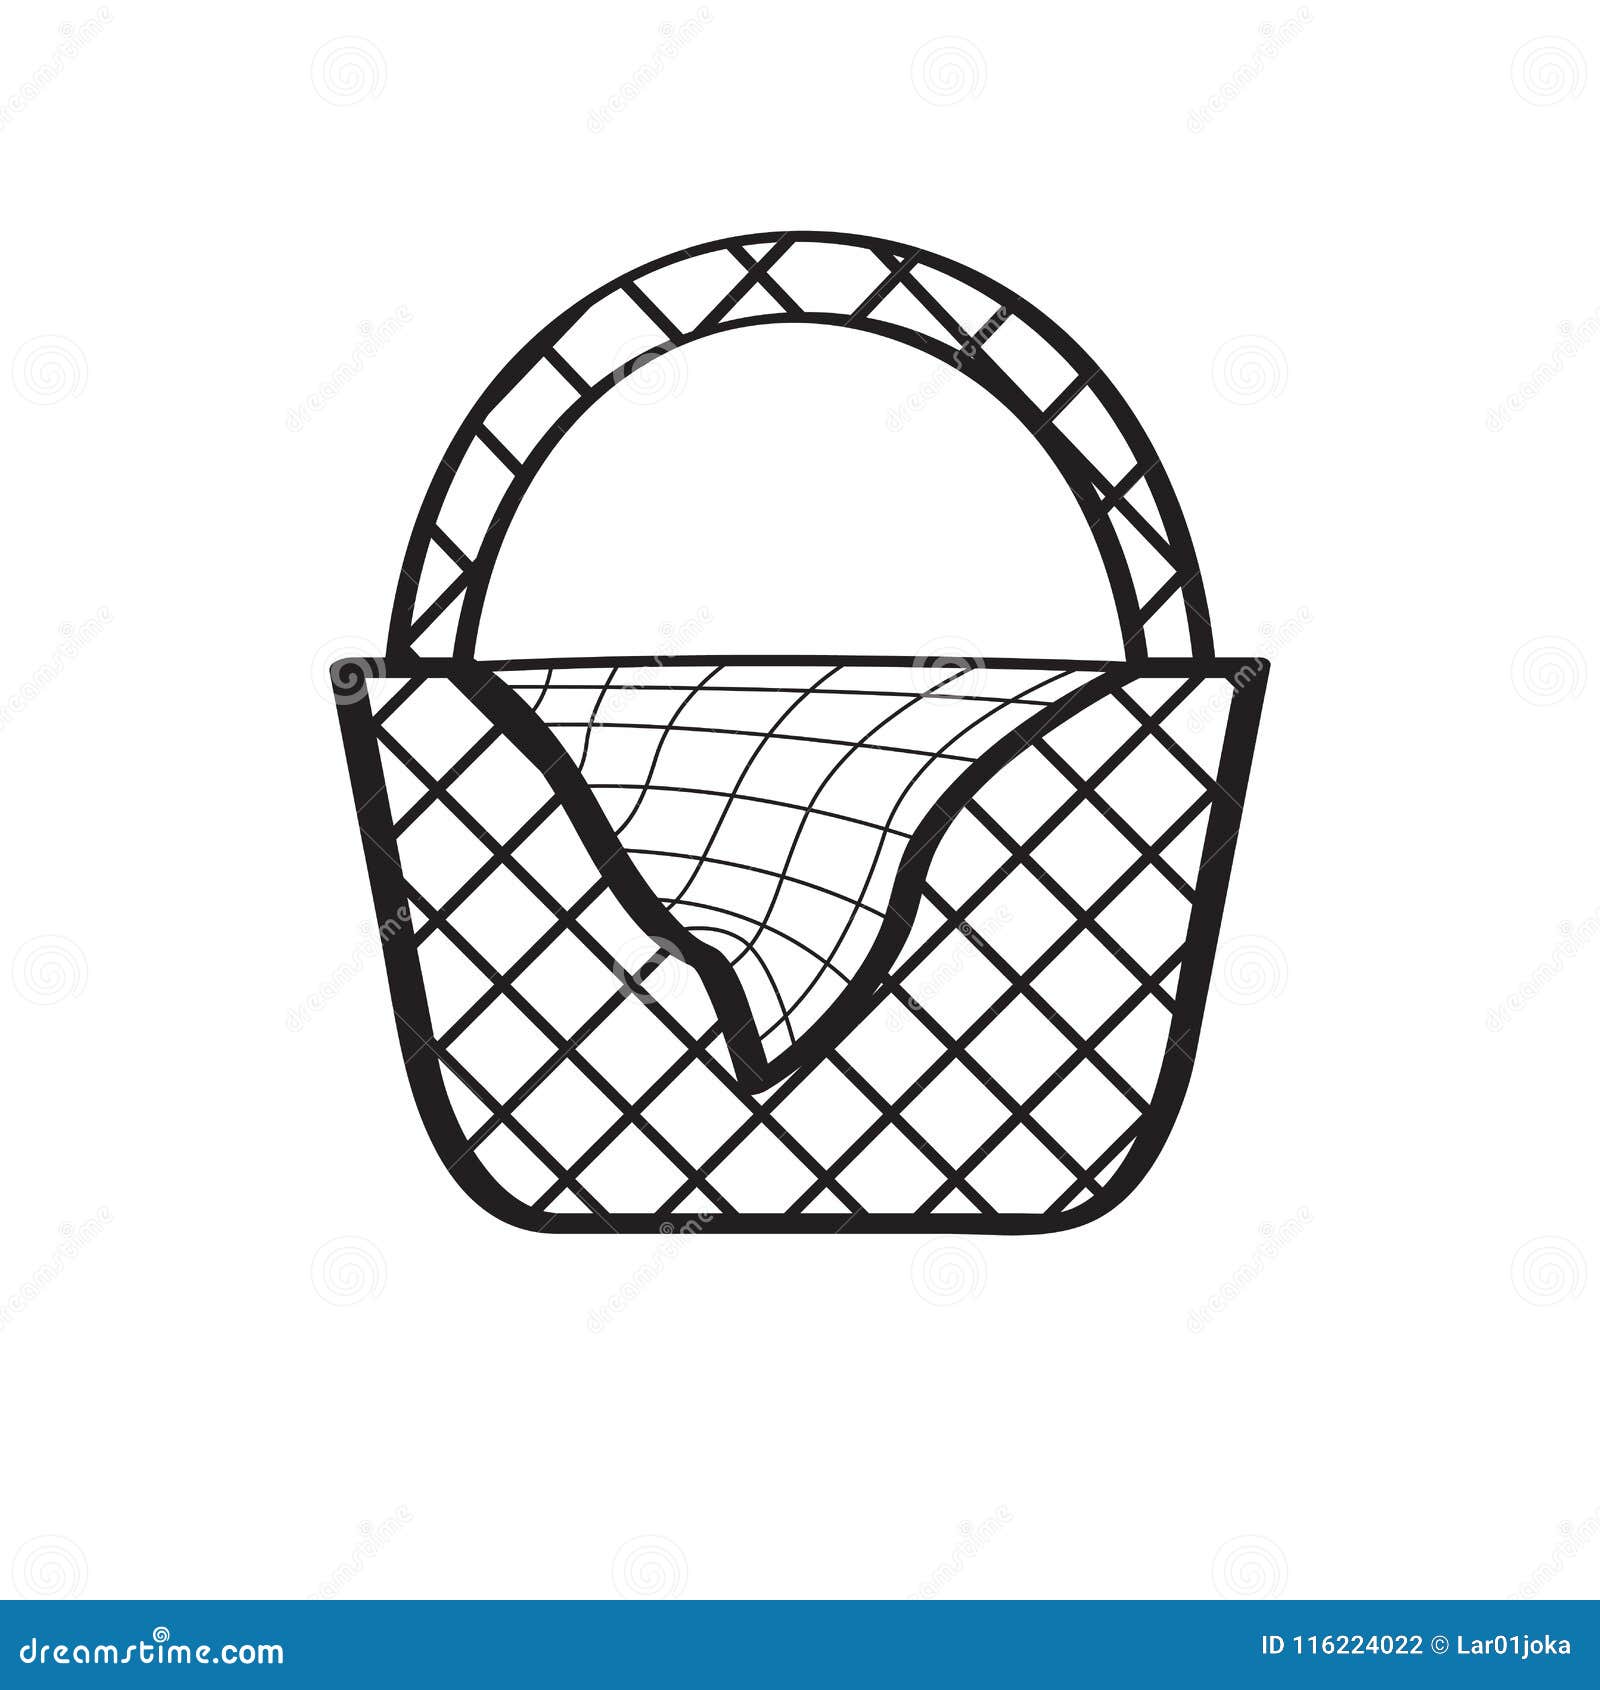 Empty picnic basket sketch stock vector. Illustration of tradition